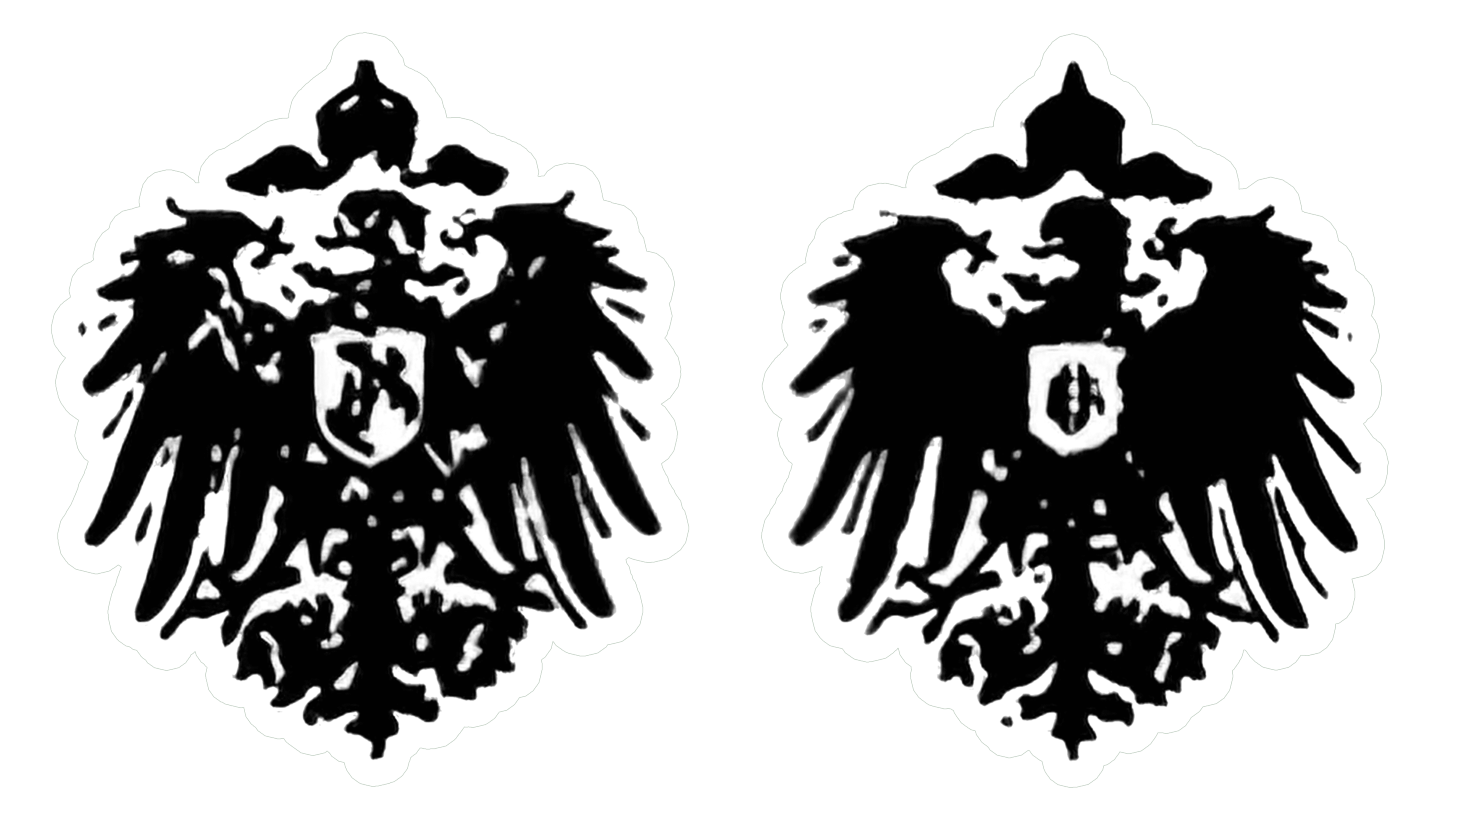 Deutsche bank sign 1870 1918